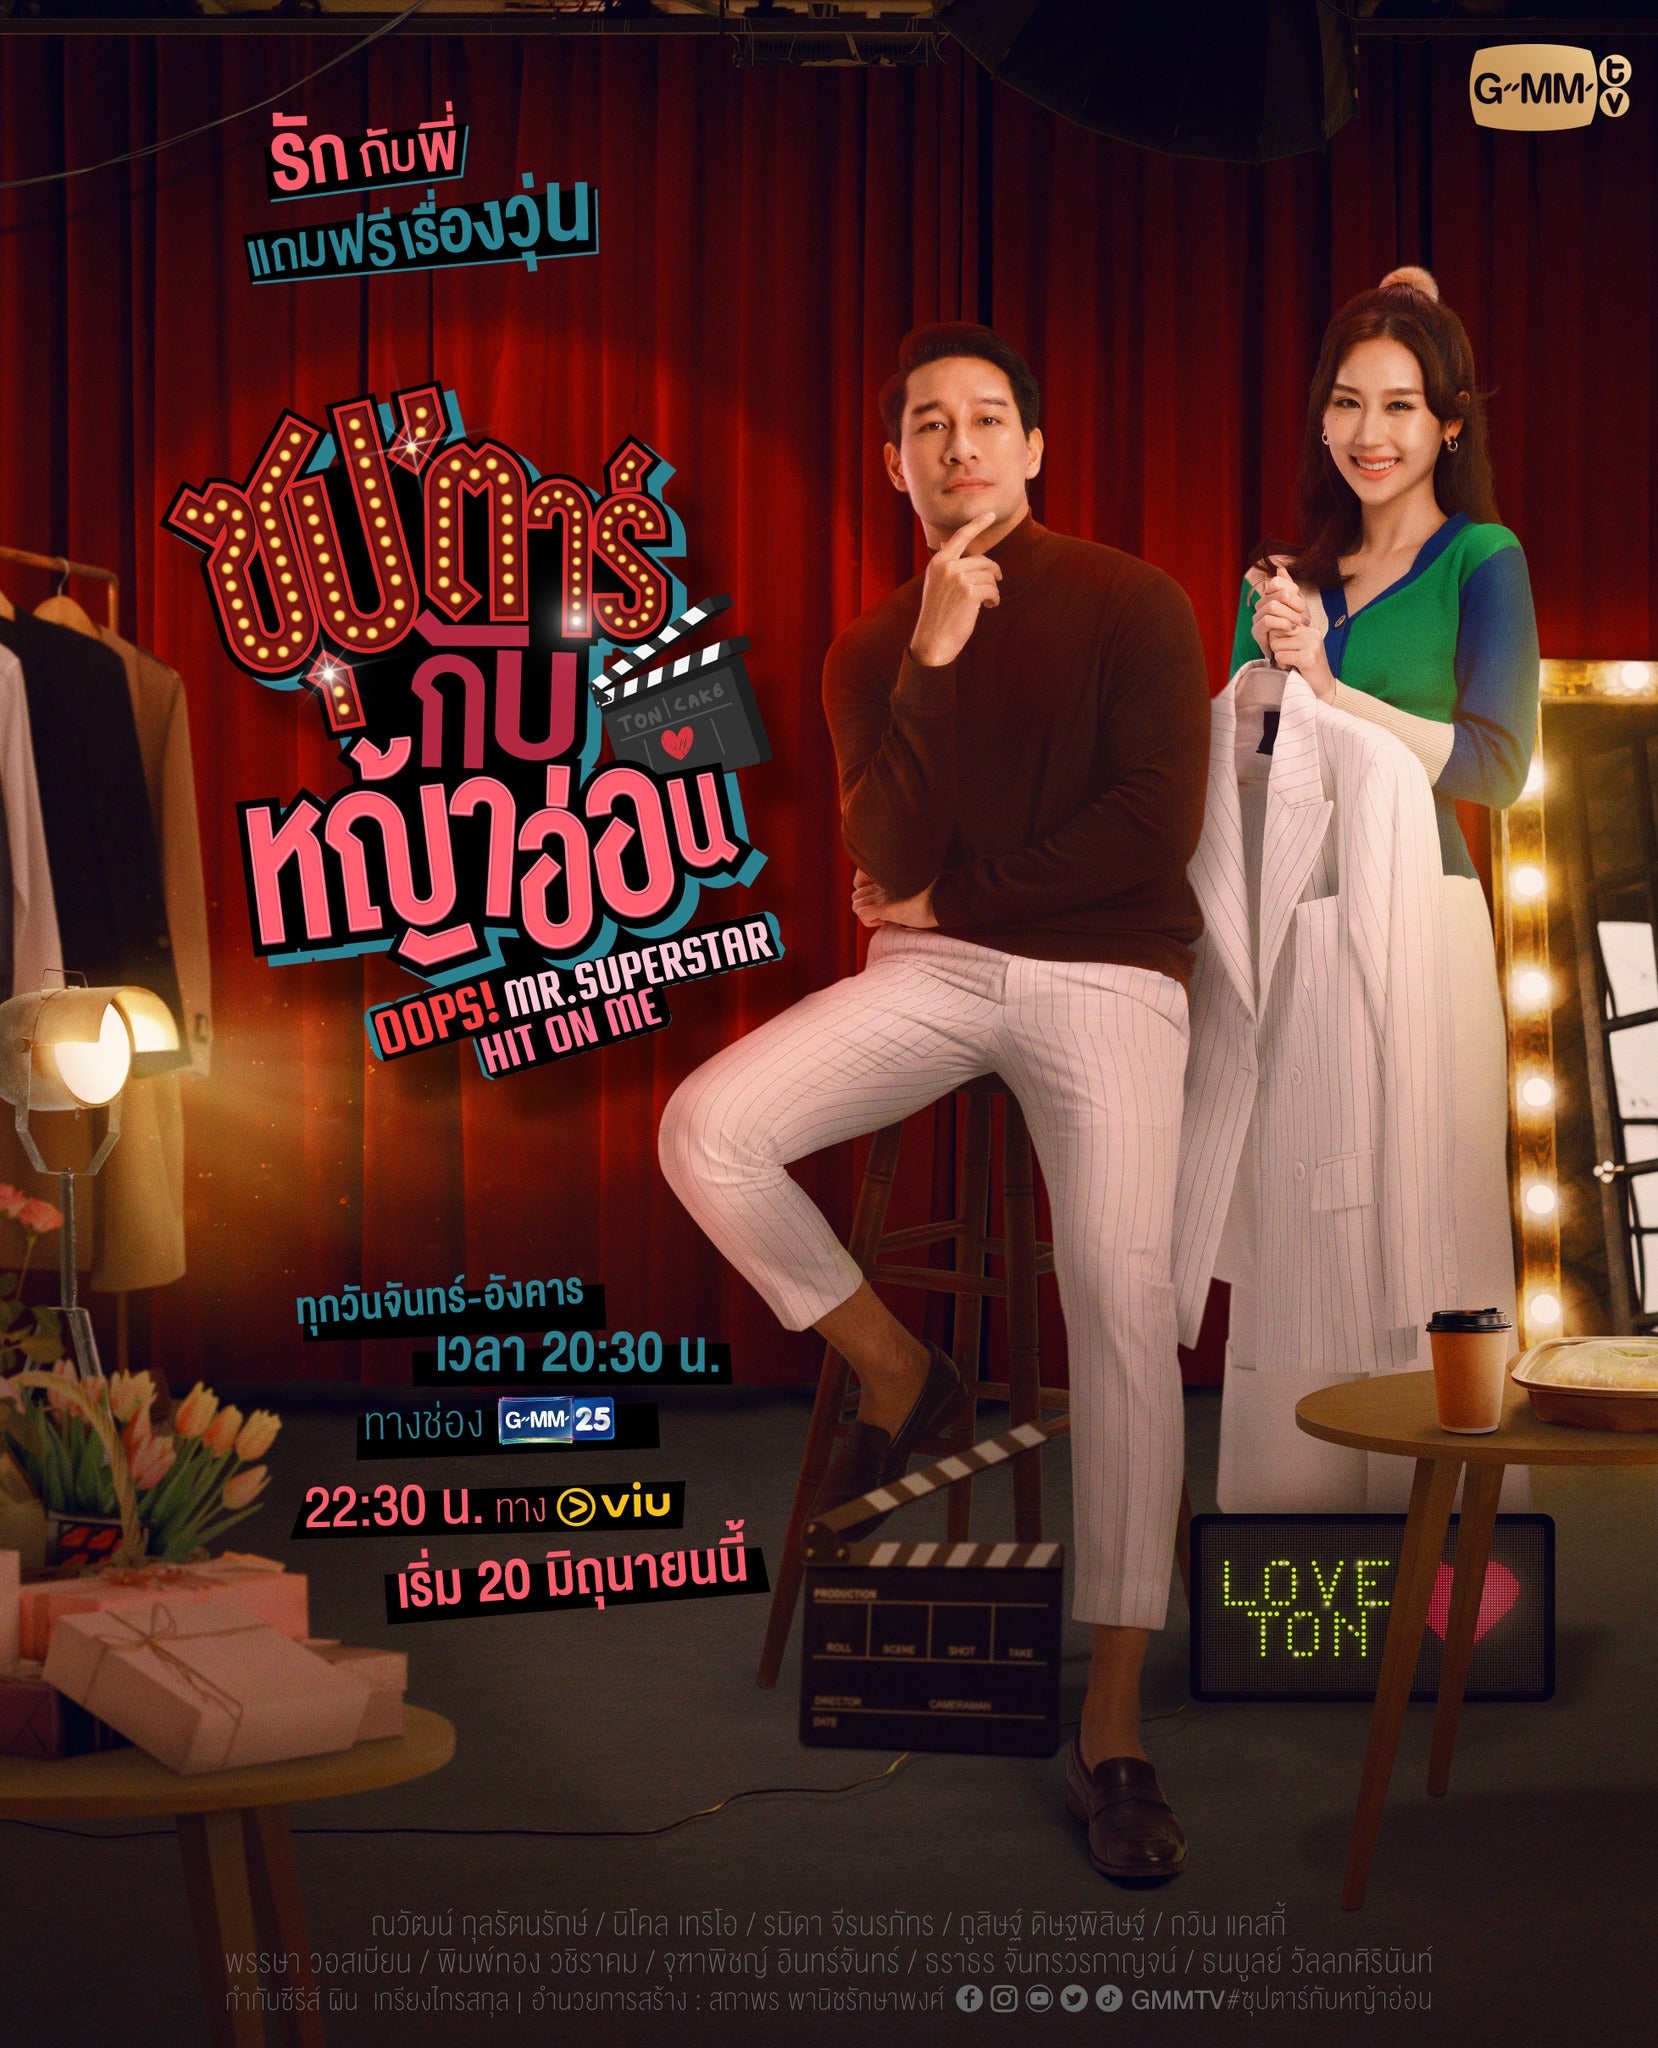 TV ratings for Oops! Mr.Superstar Hit On Me (ซุป'ตาร์กับหญ้าอ่อน) in South Korea. GMM 25 TV series